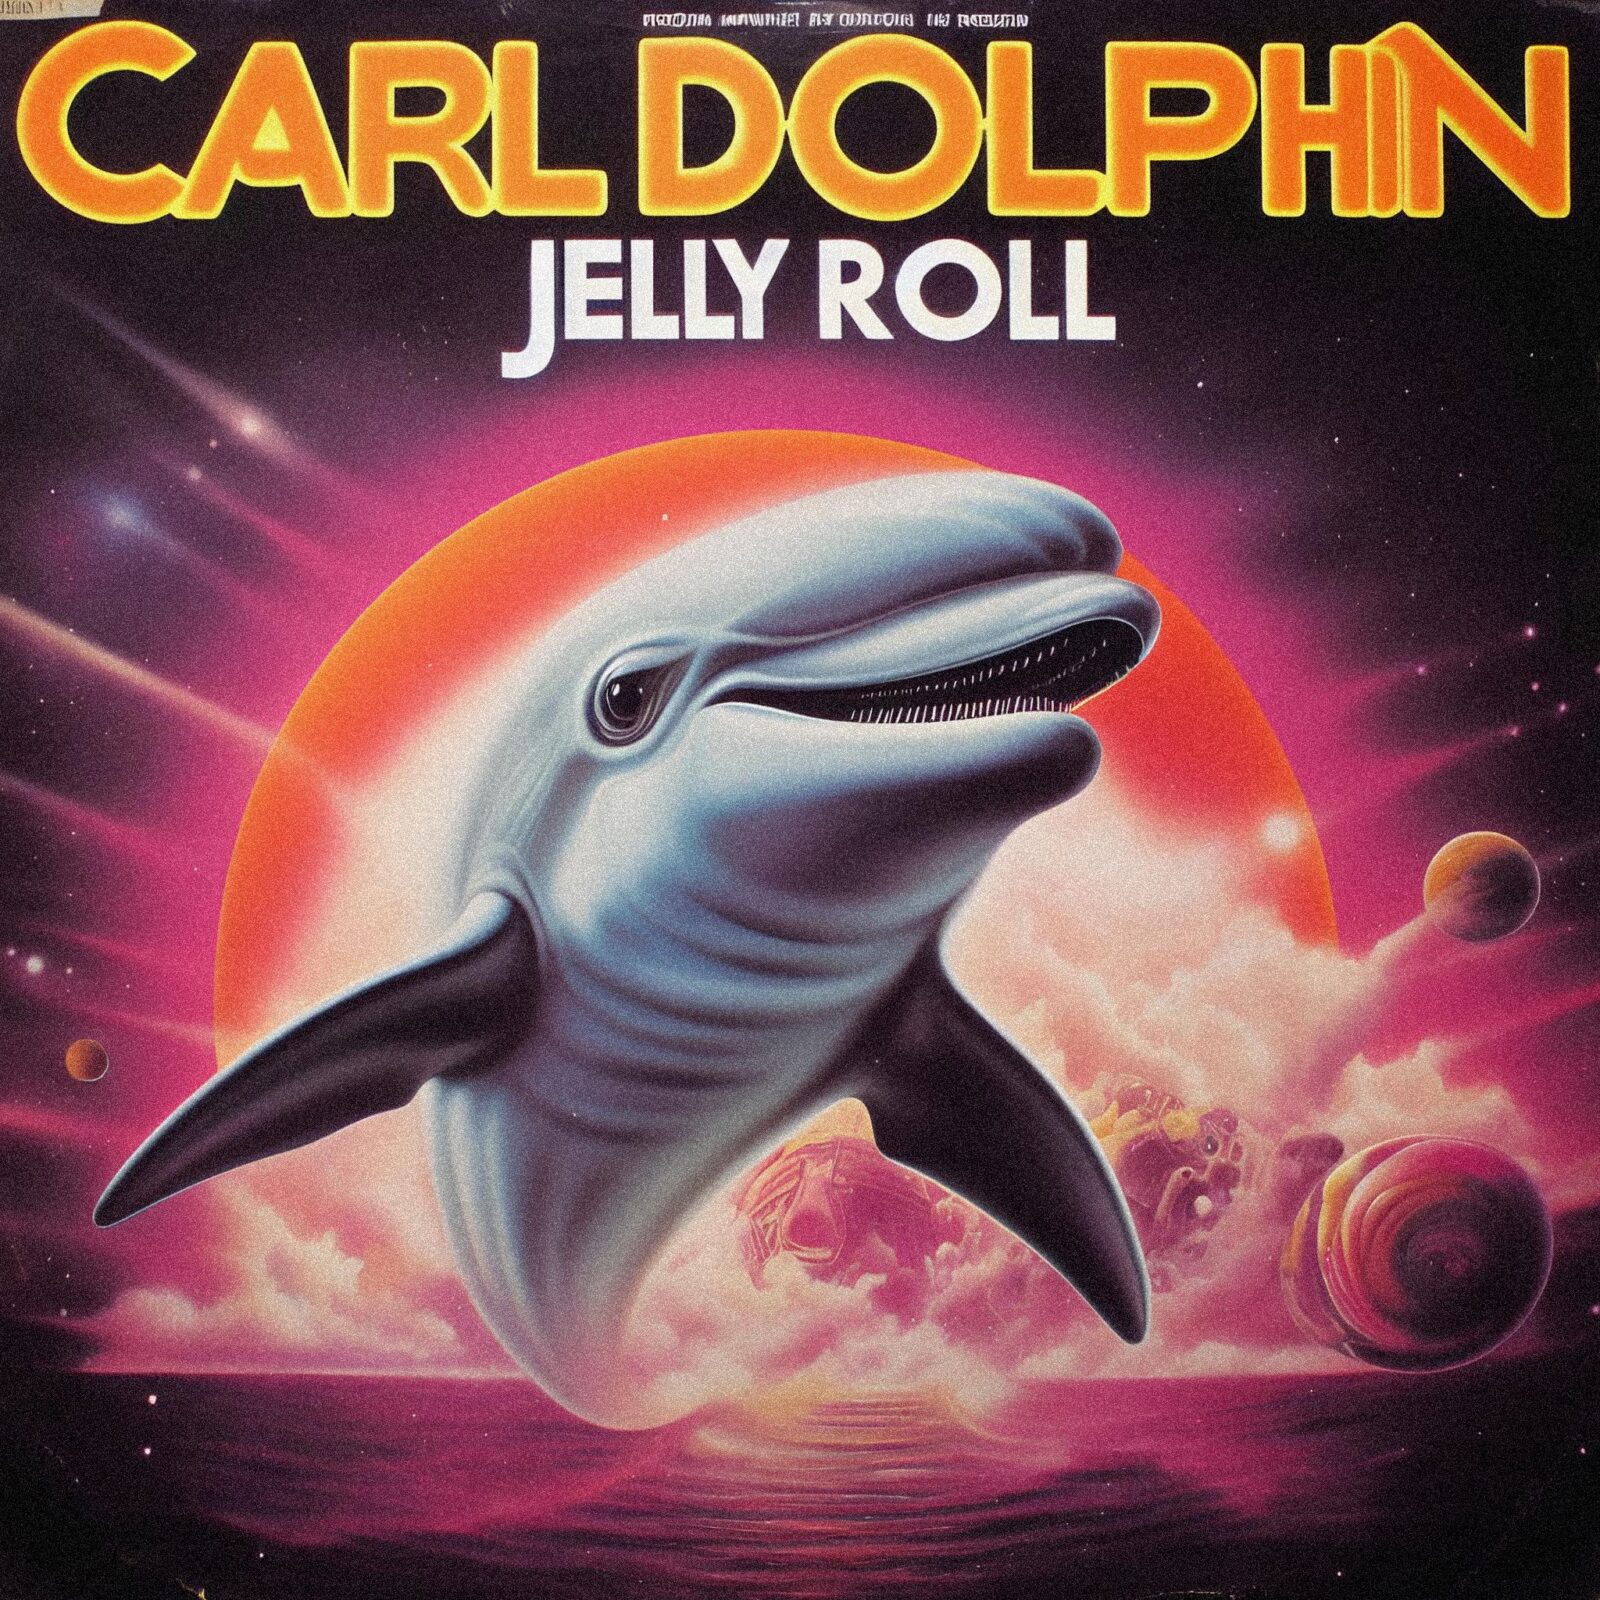 Single: Carl Dolphin – Jelly Roll